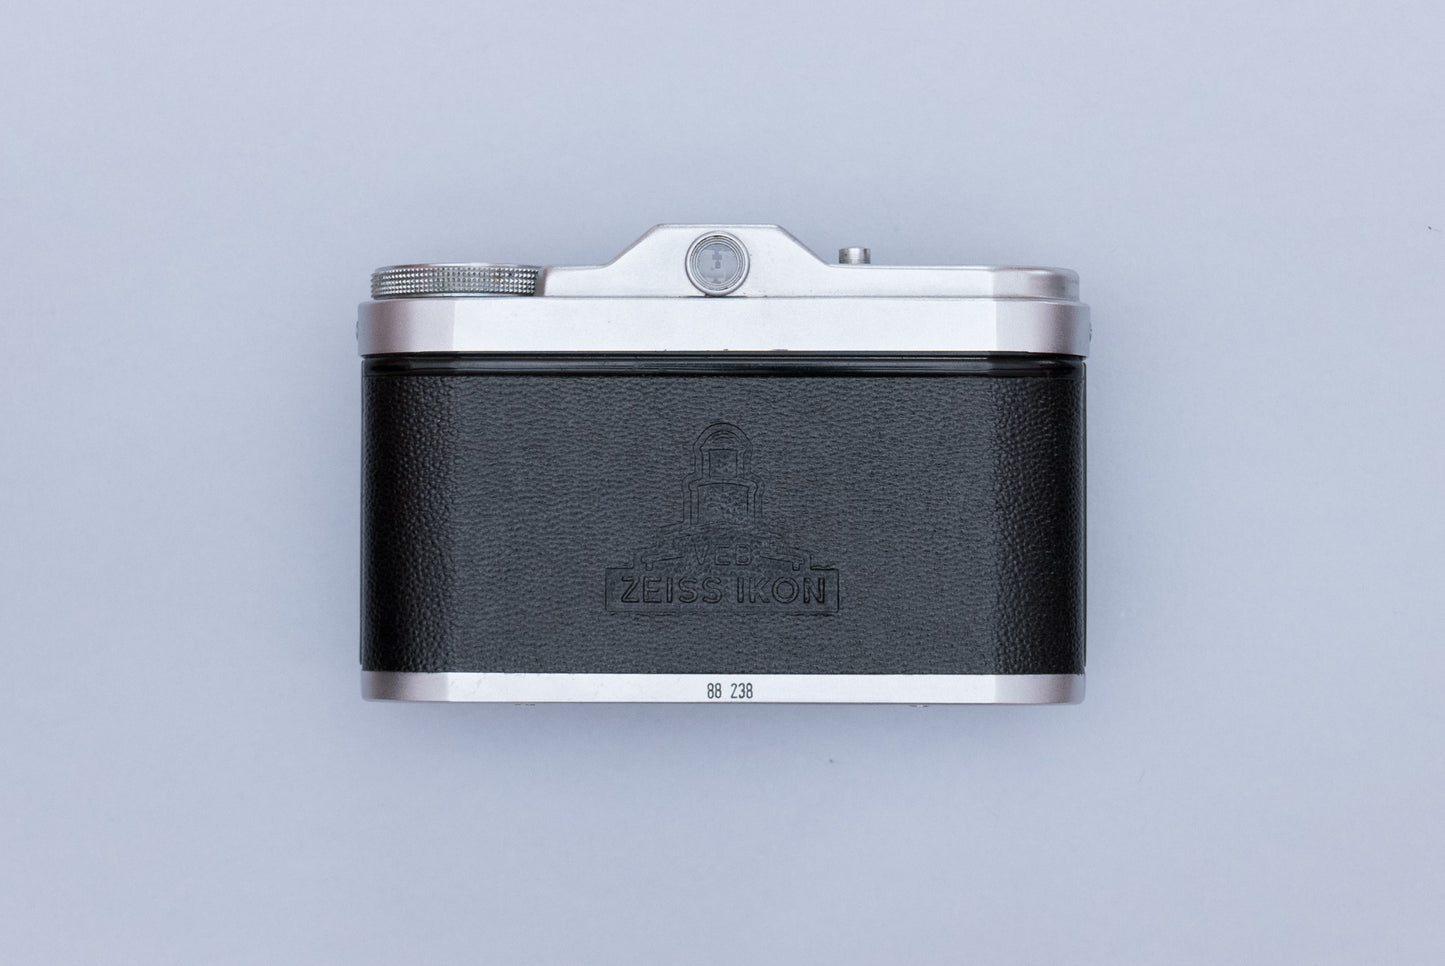 Zeiss Ikon Taxona Vintage 35mm Film Camera